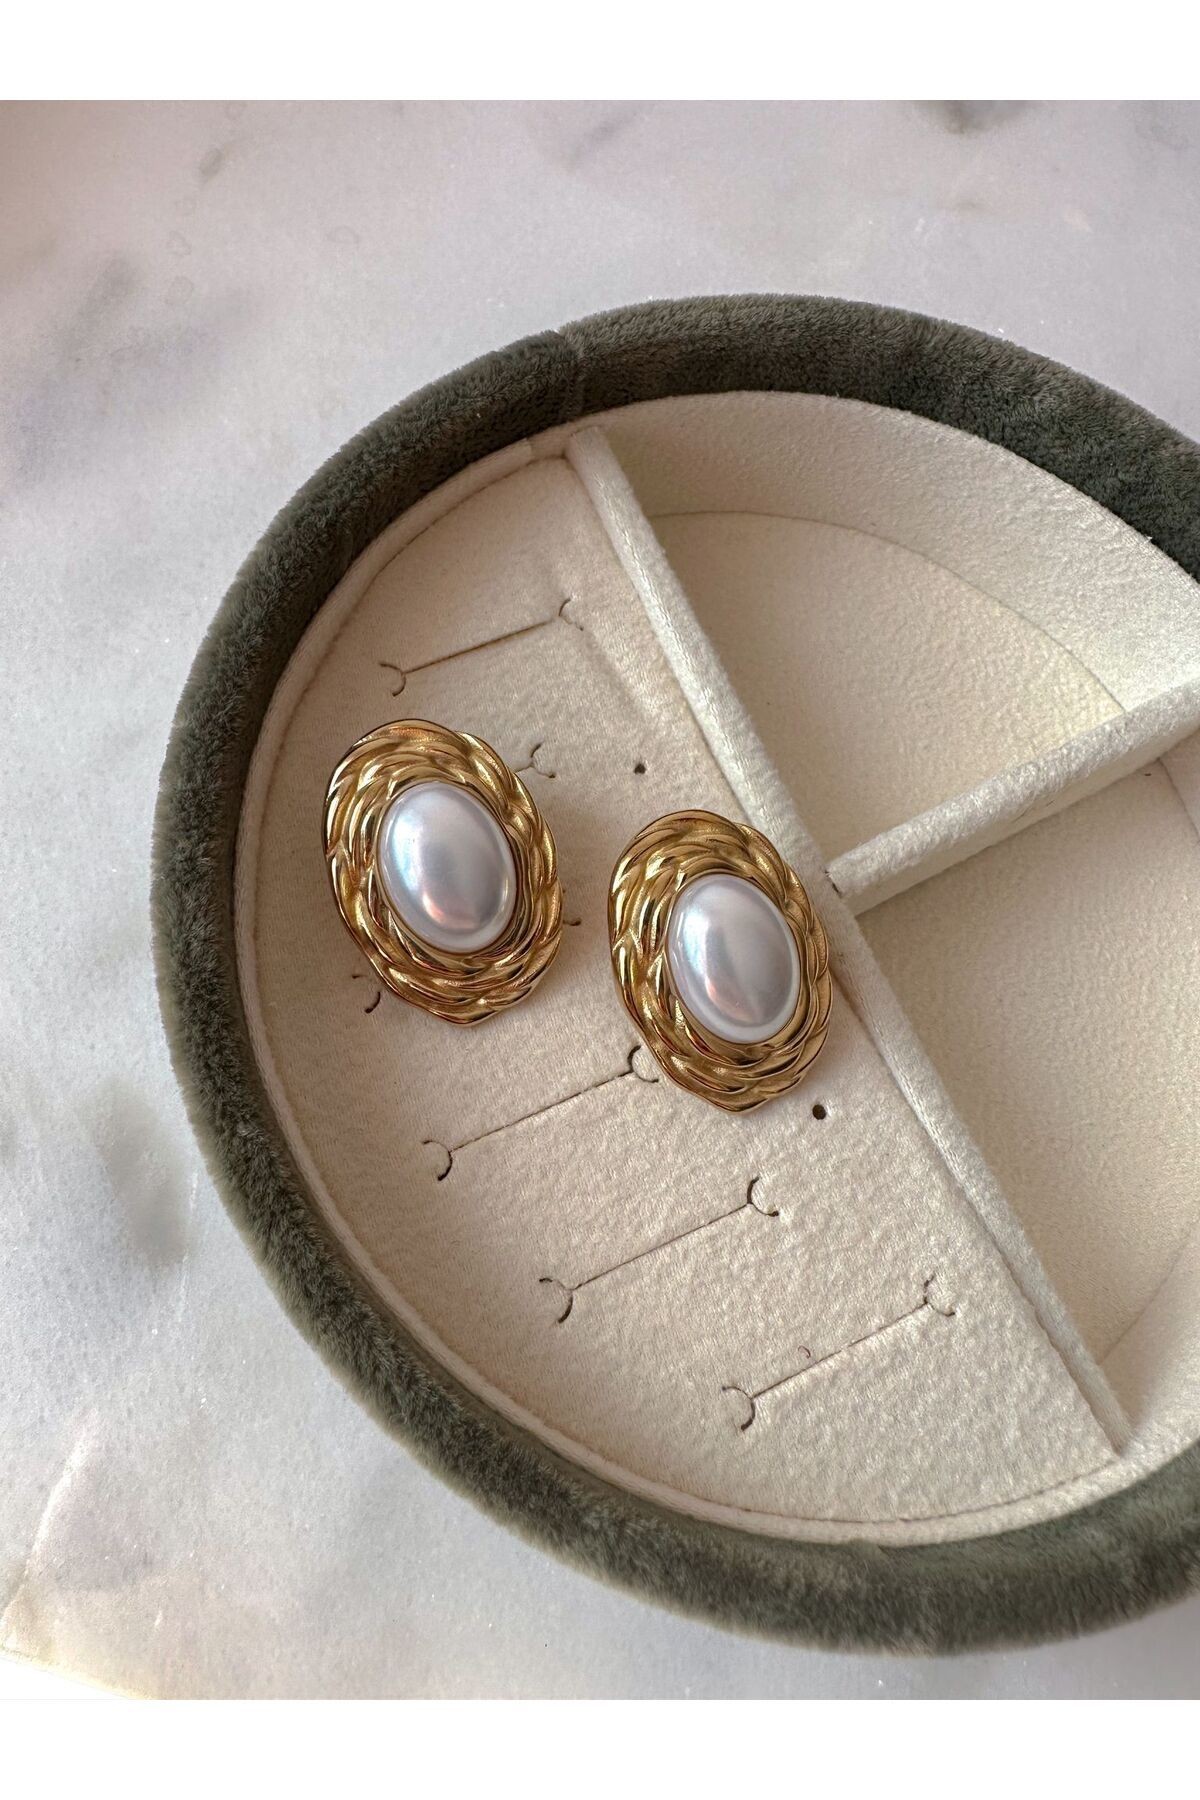 Large Oval Vintage Look Earrings with Pearls